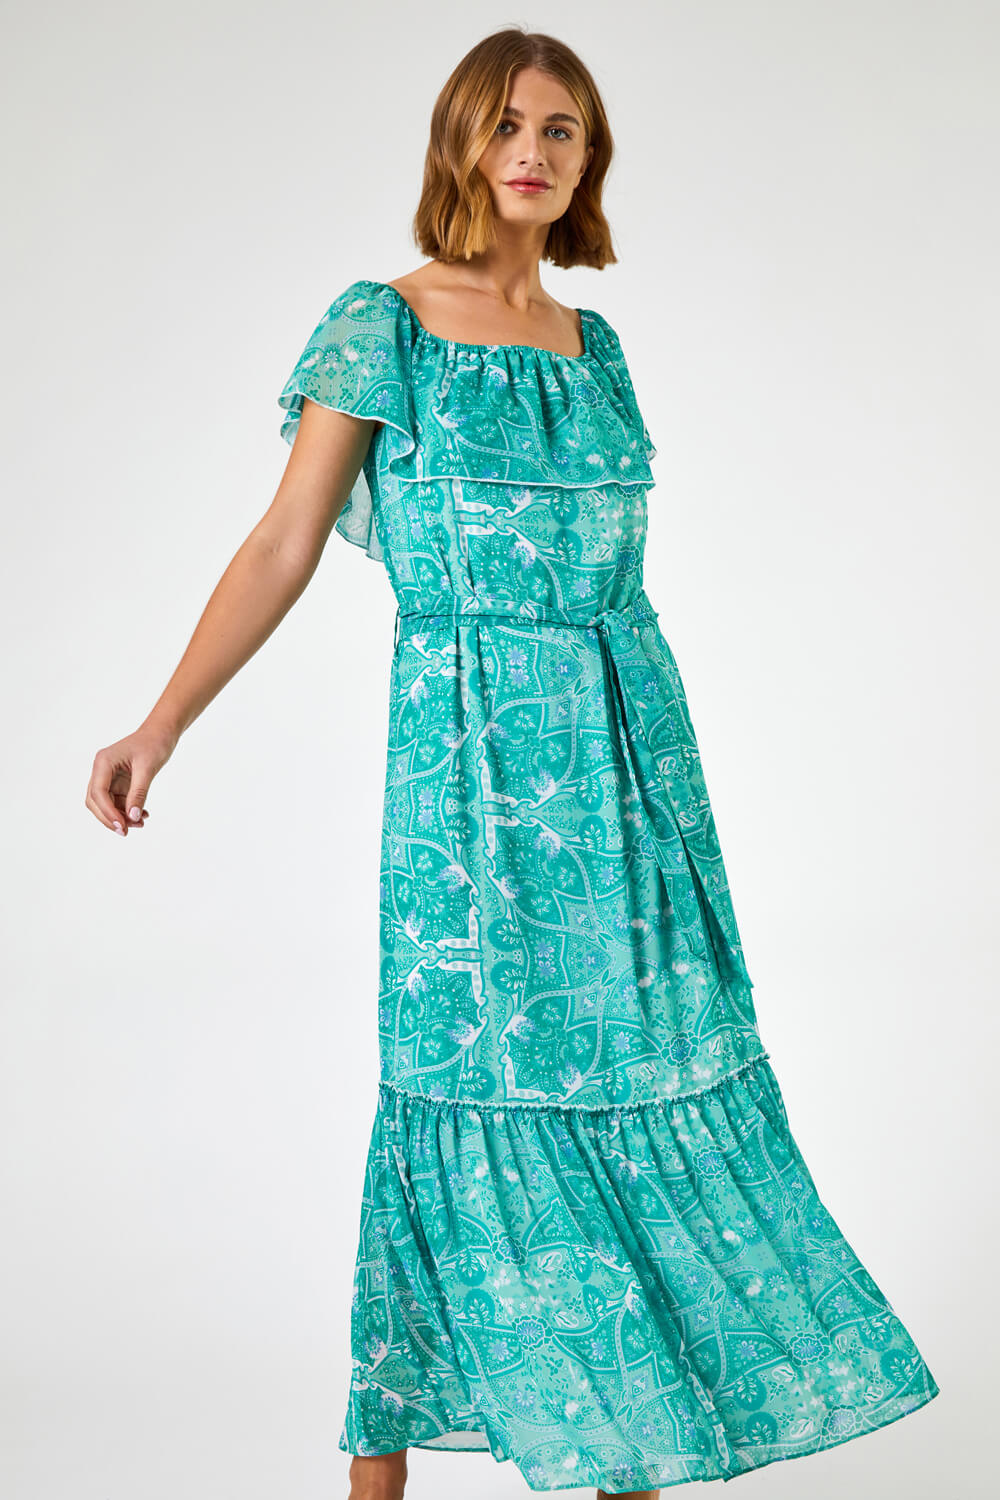 Paisley Print Tiered Maxi Dress in Teal - Roman Originals UK